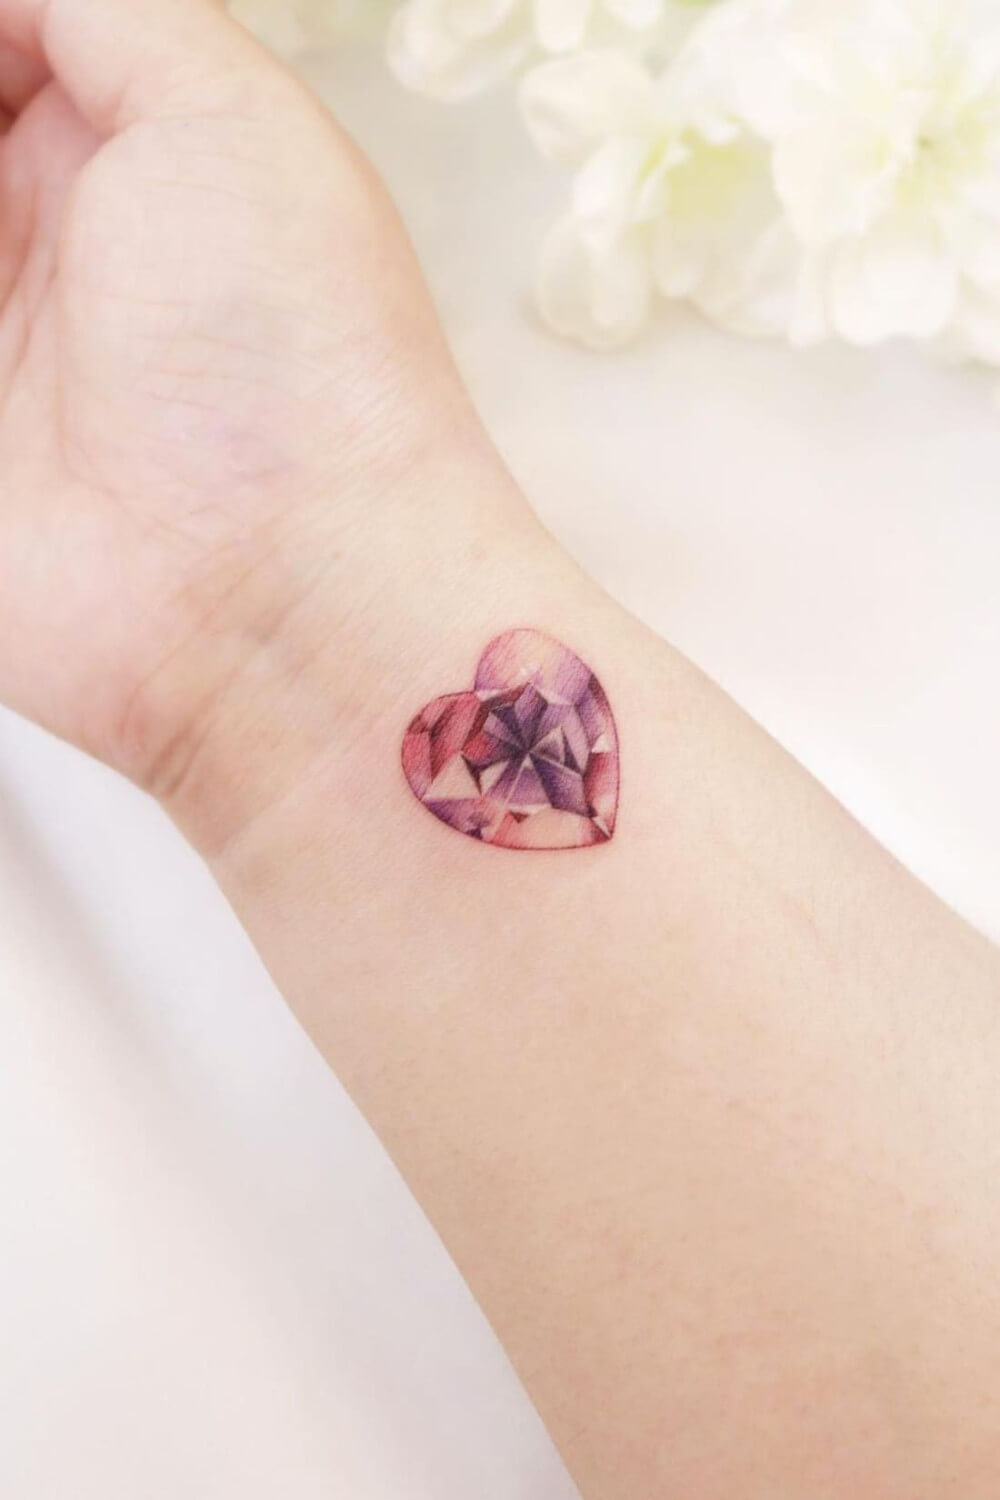 Red Crystal Heart Tattoo Ideas